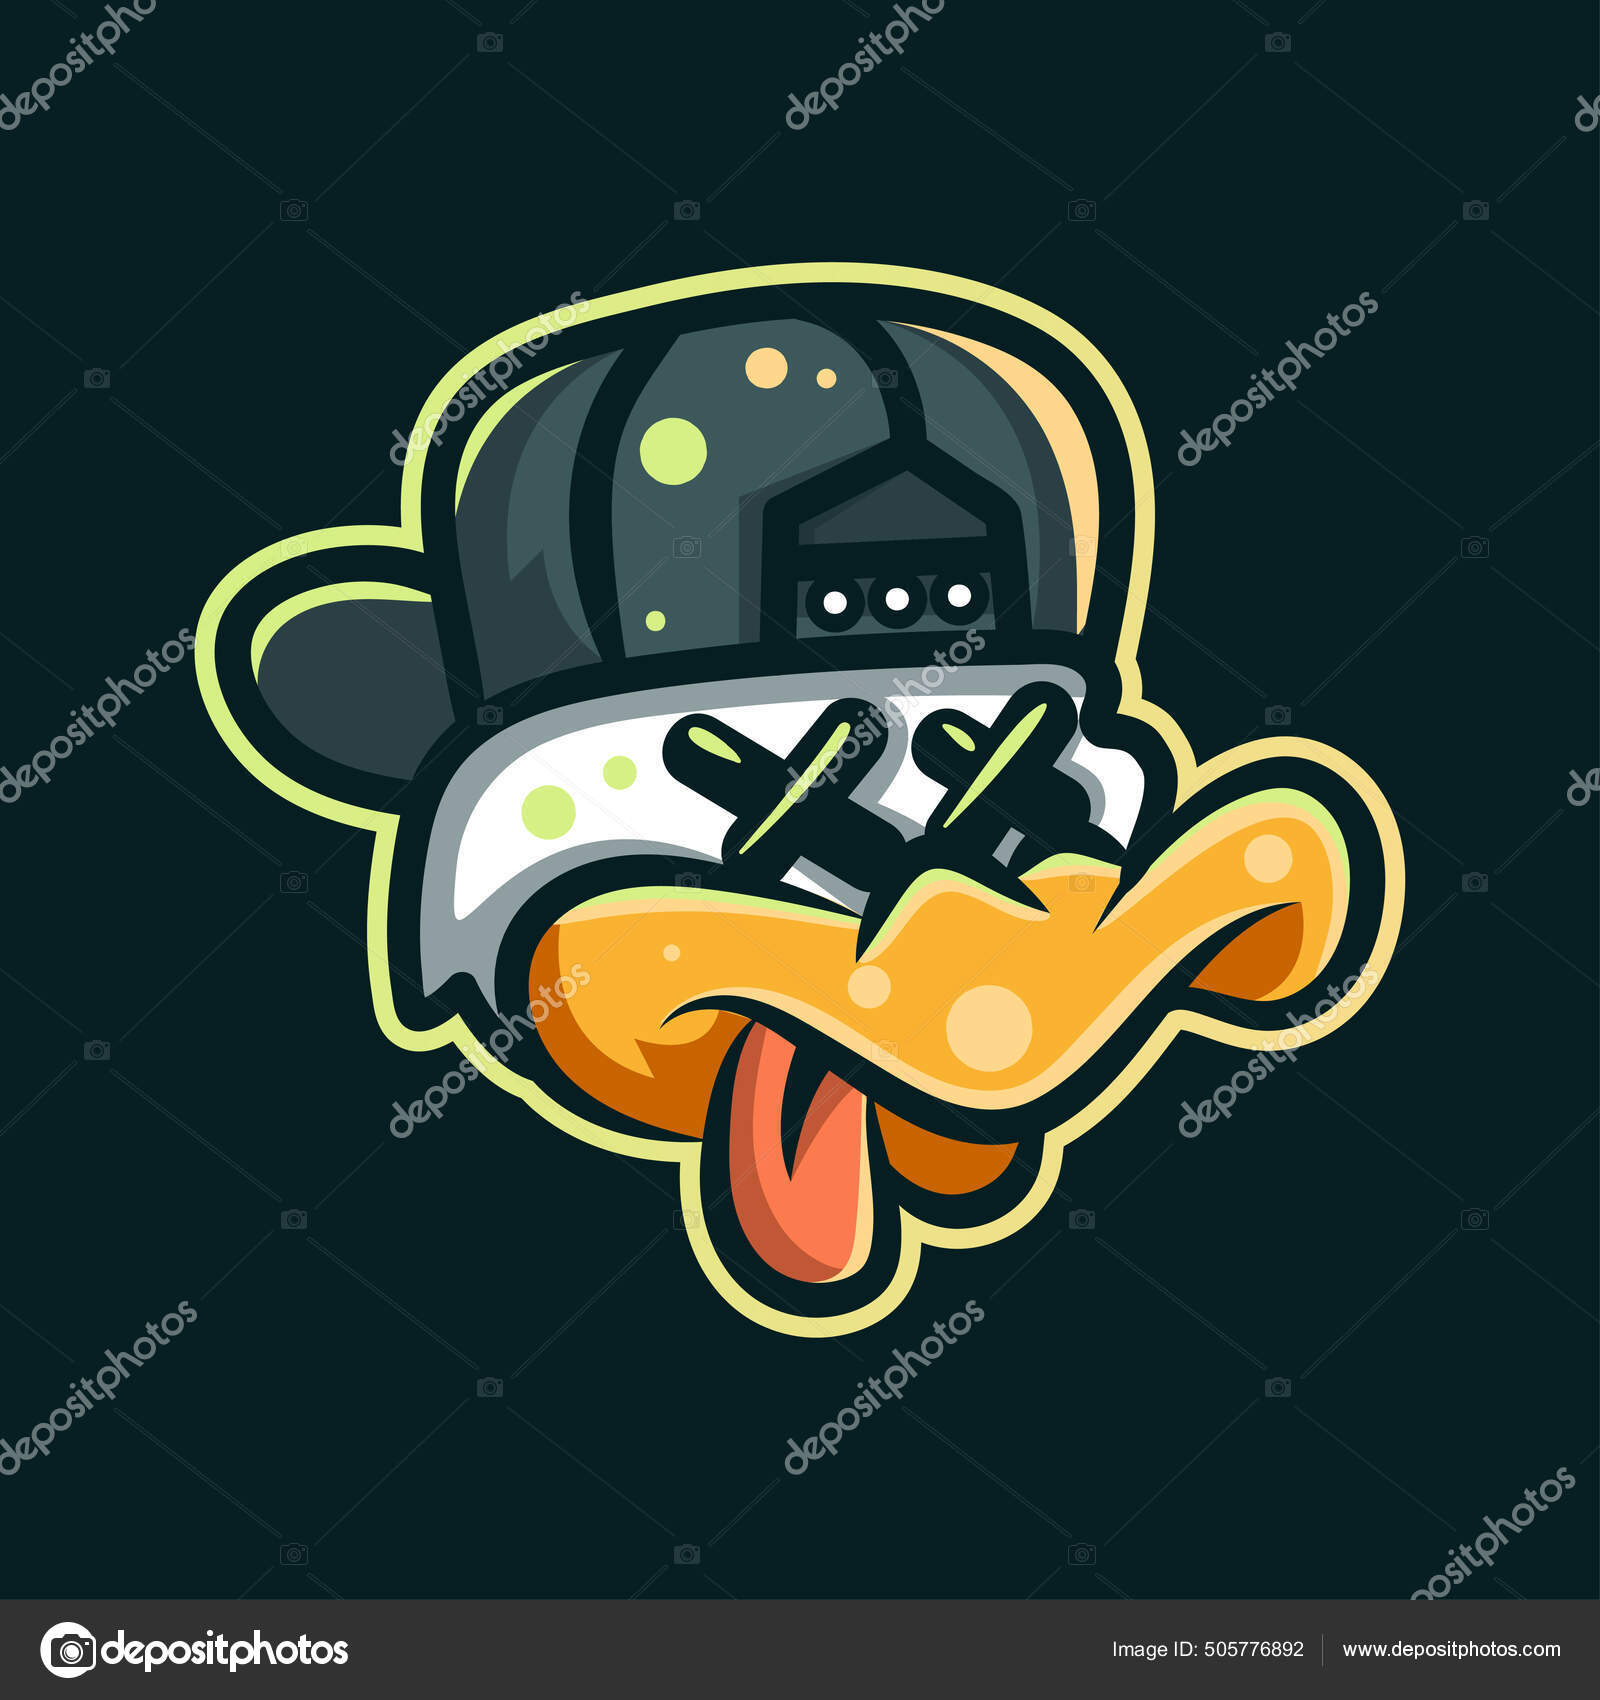 cool duck logos